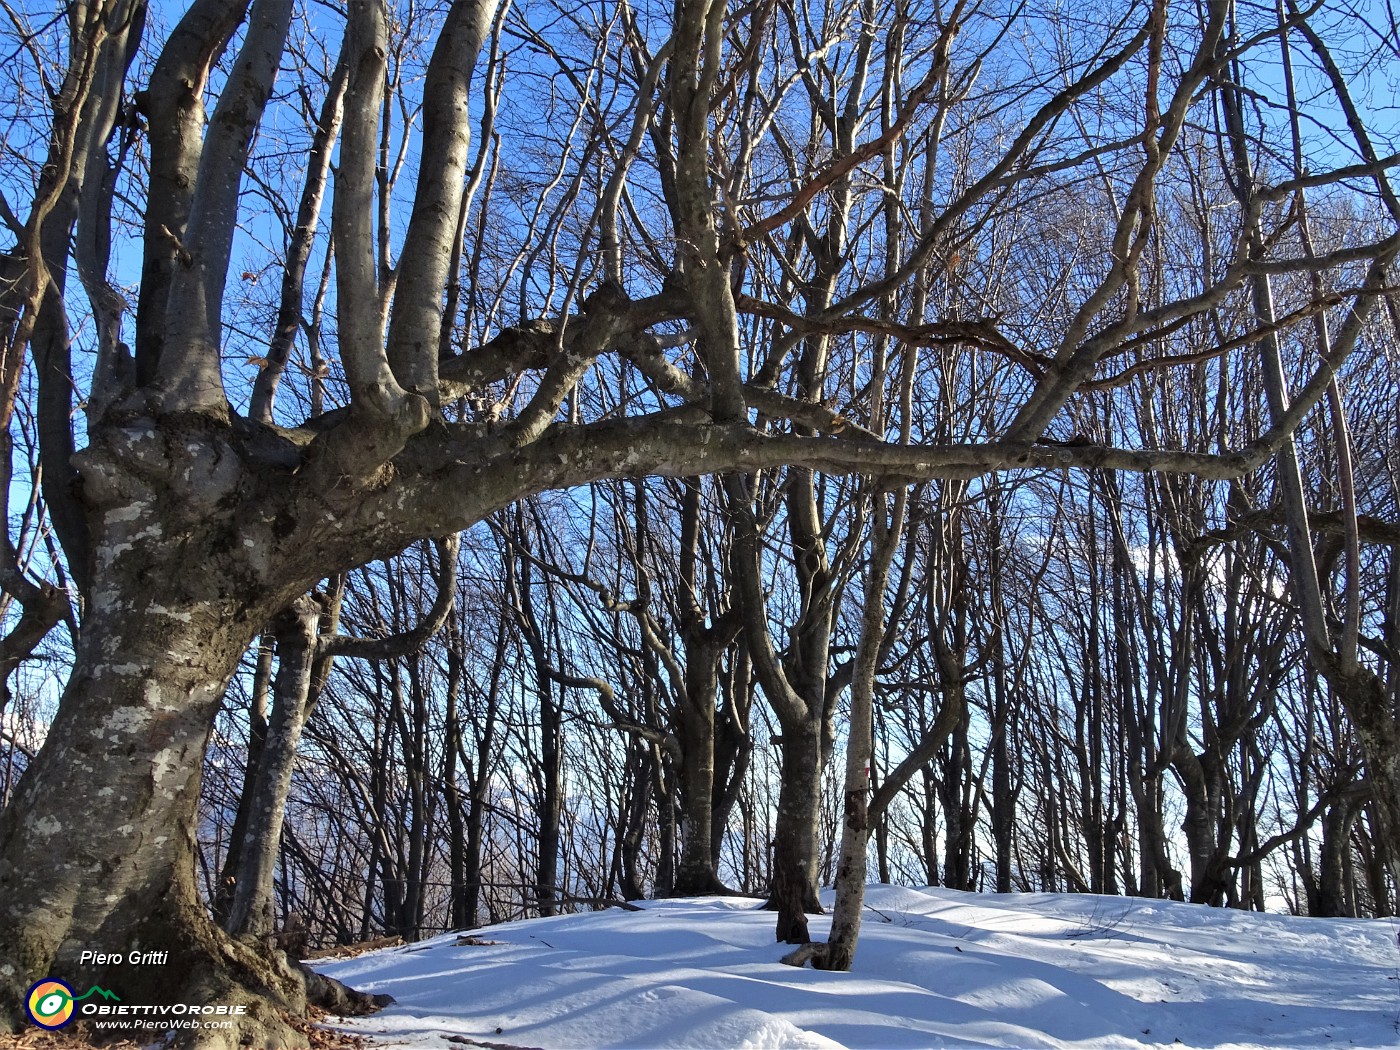 24 Pestando neve tra faggi secolari dalle bellissime forme.JPG